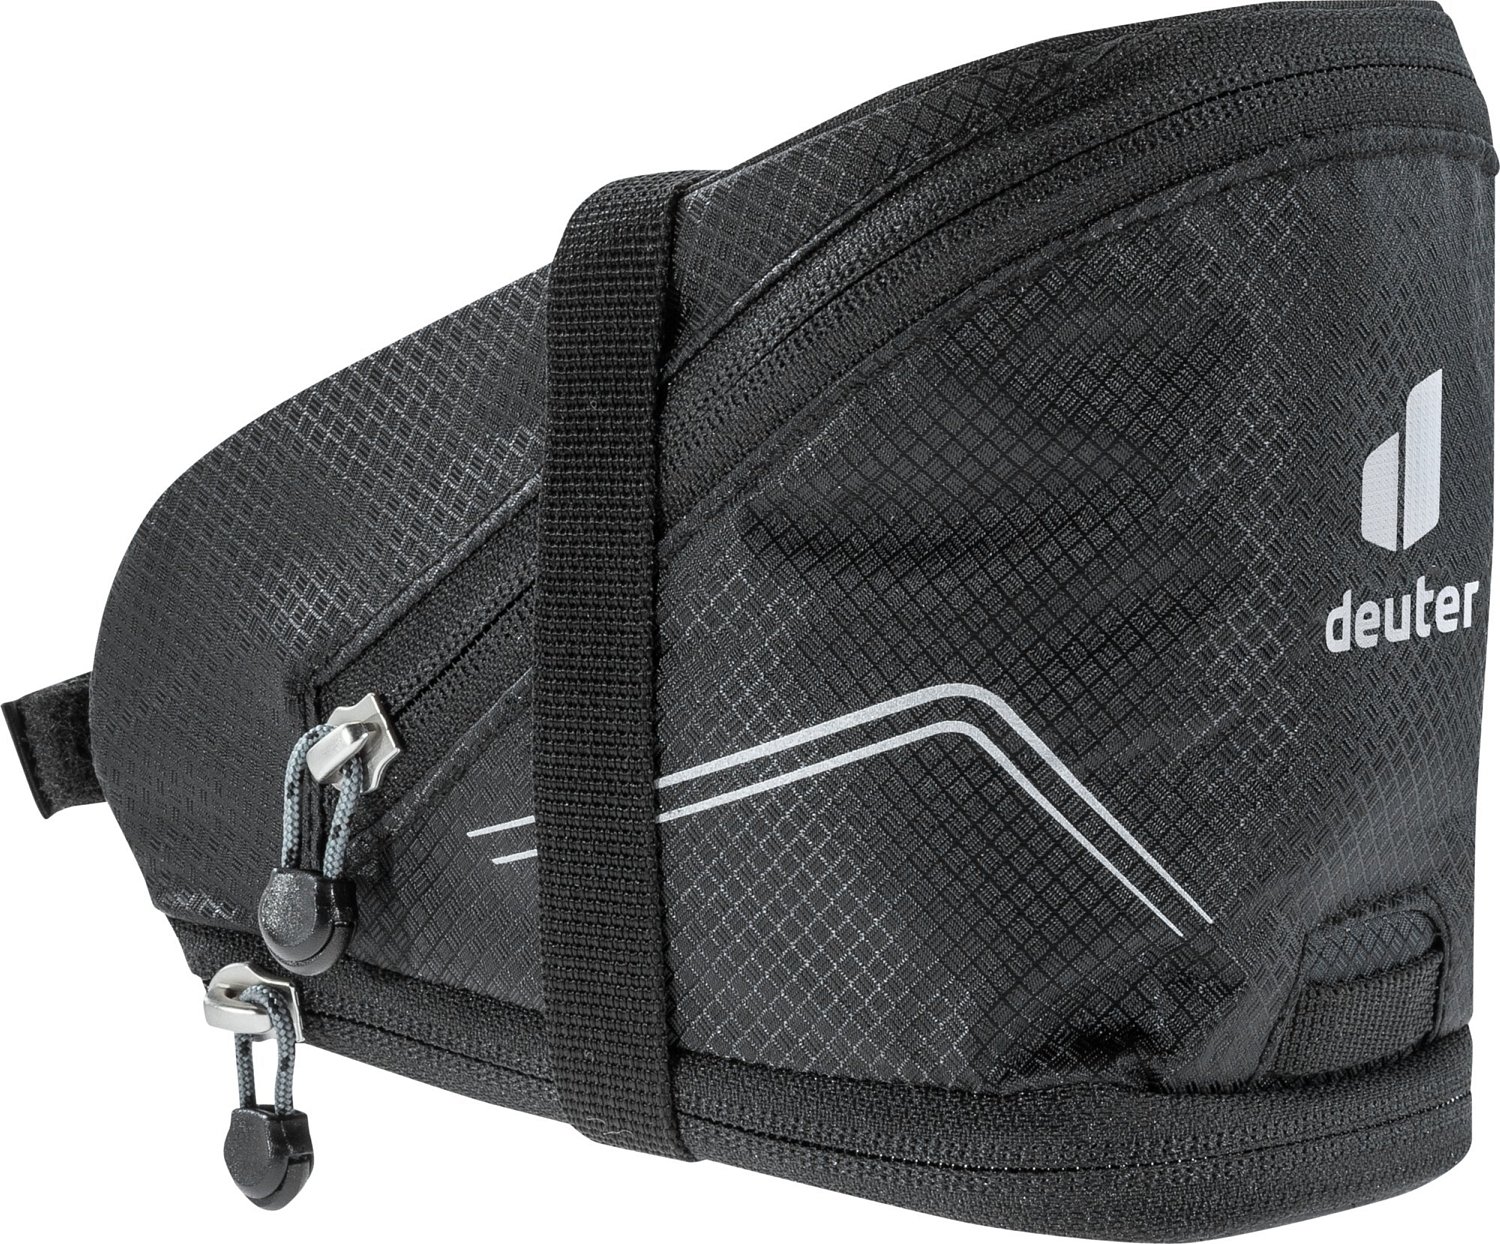 Велосумка Deuter Bike Bag II, под седло, 1.1 л, Black, 2021, 3291121_7000 рюкзак saucony string bag black 2021 sau900016 bk